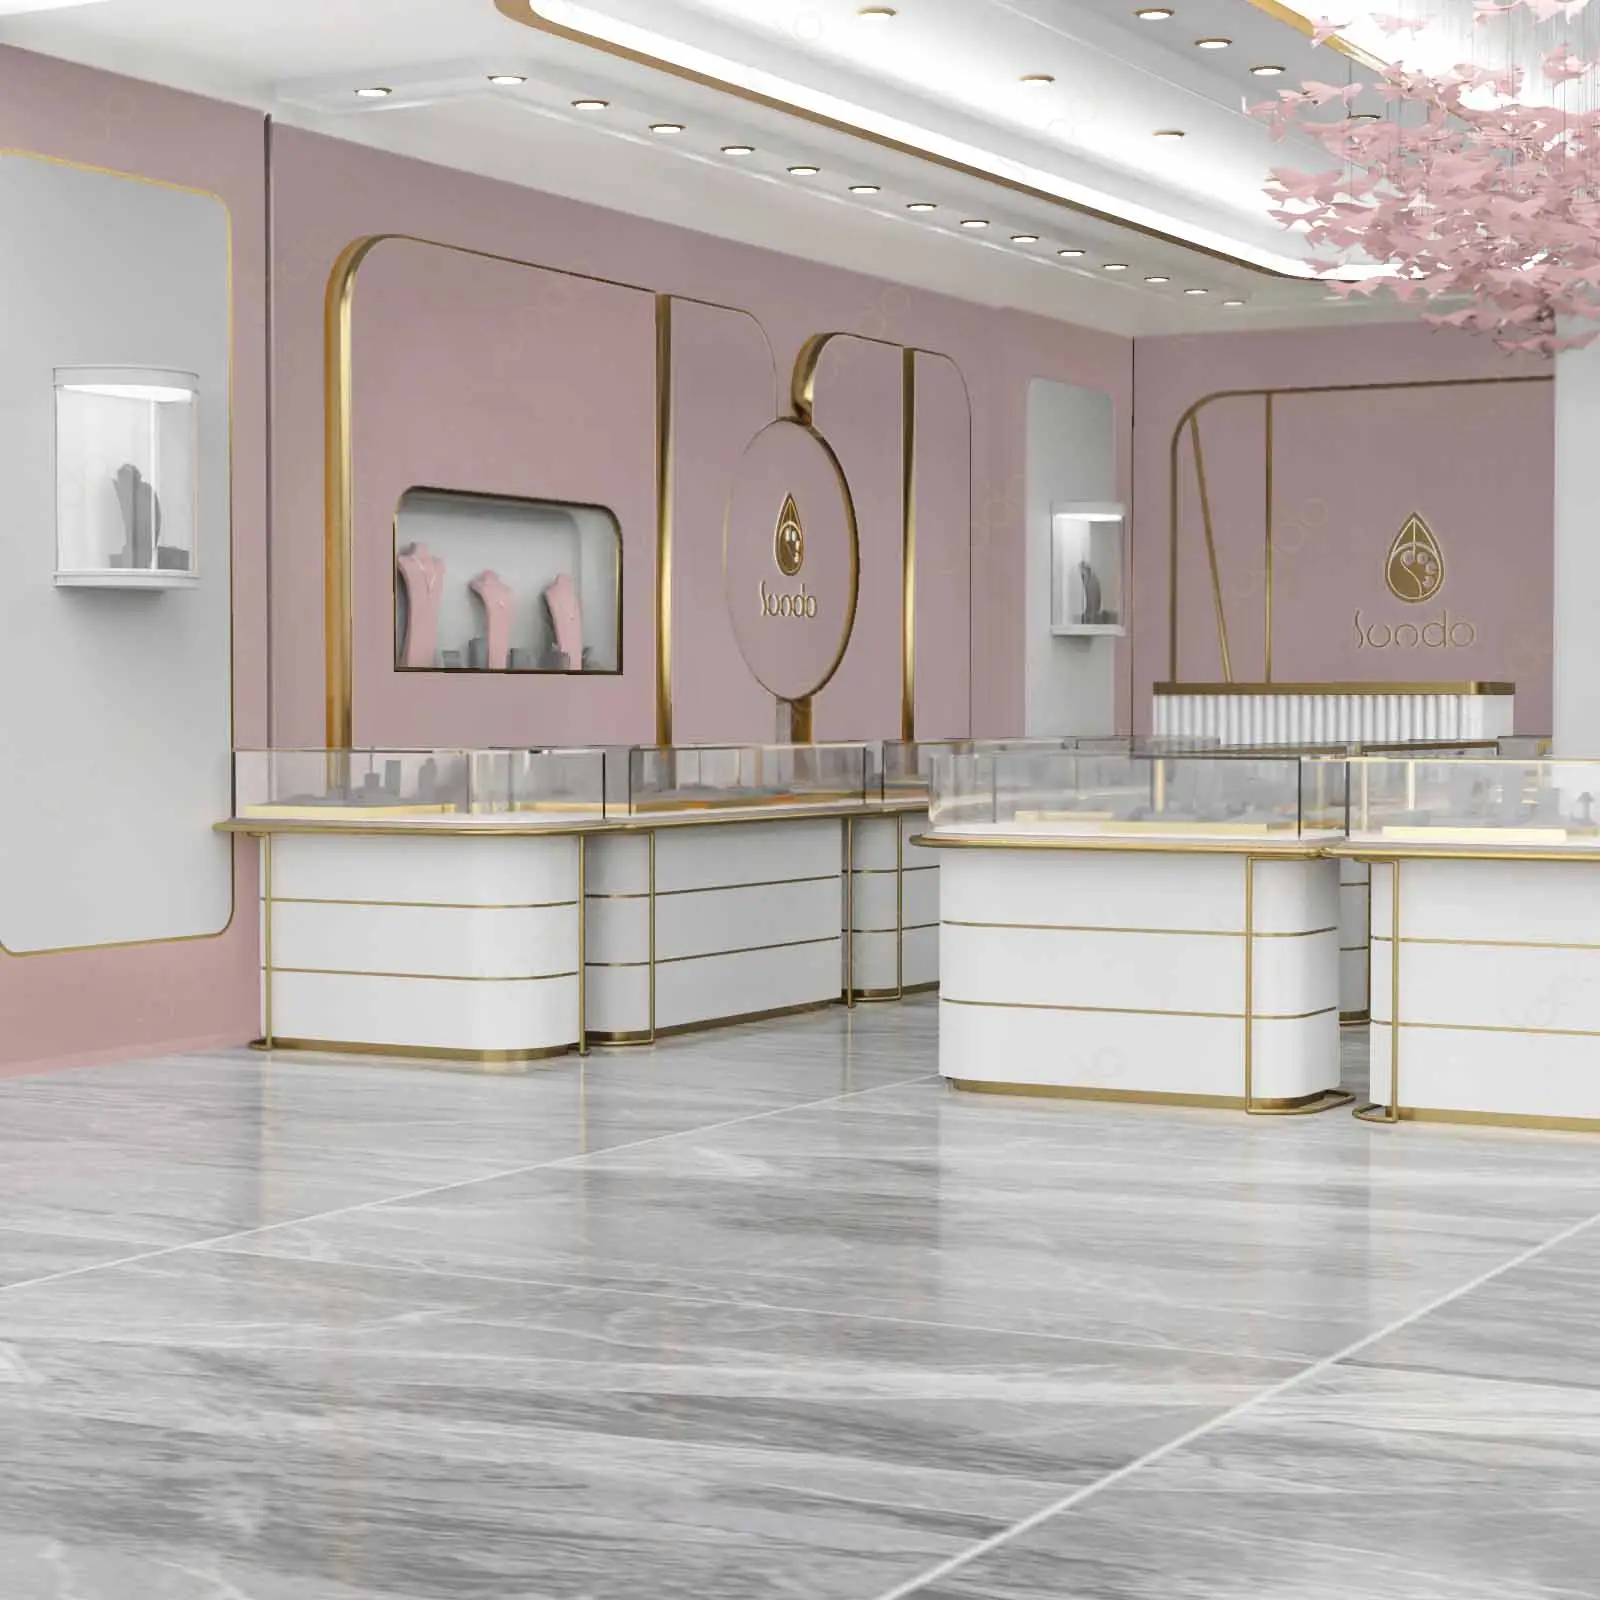 SUNDO Luxury Gold Jewellery Shop Interior Design Jewelry Accessories Showcase Jewellery Shop Interior Design Modern Ideas